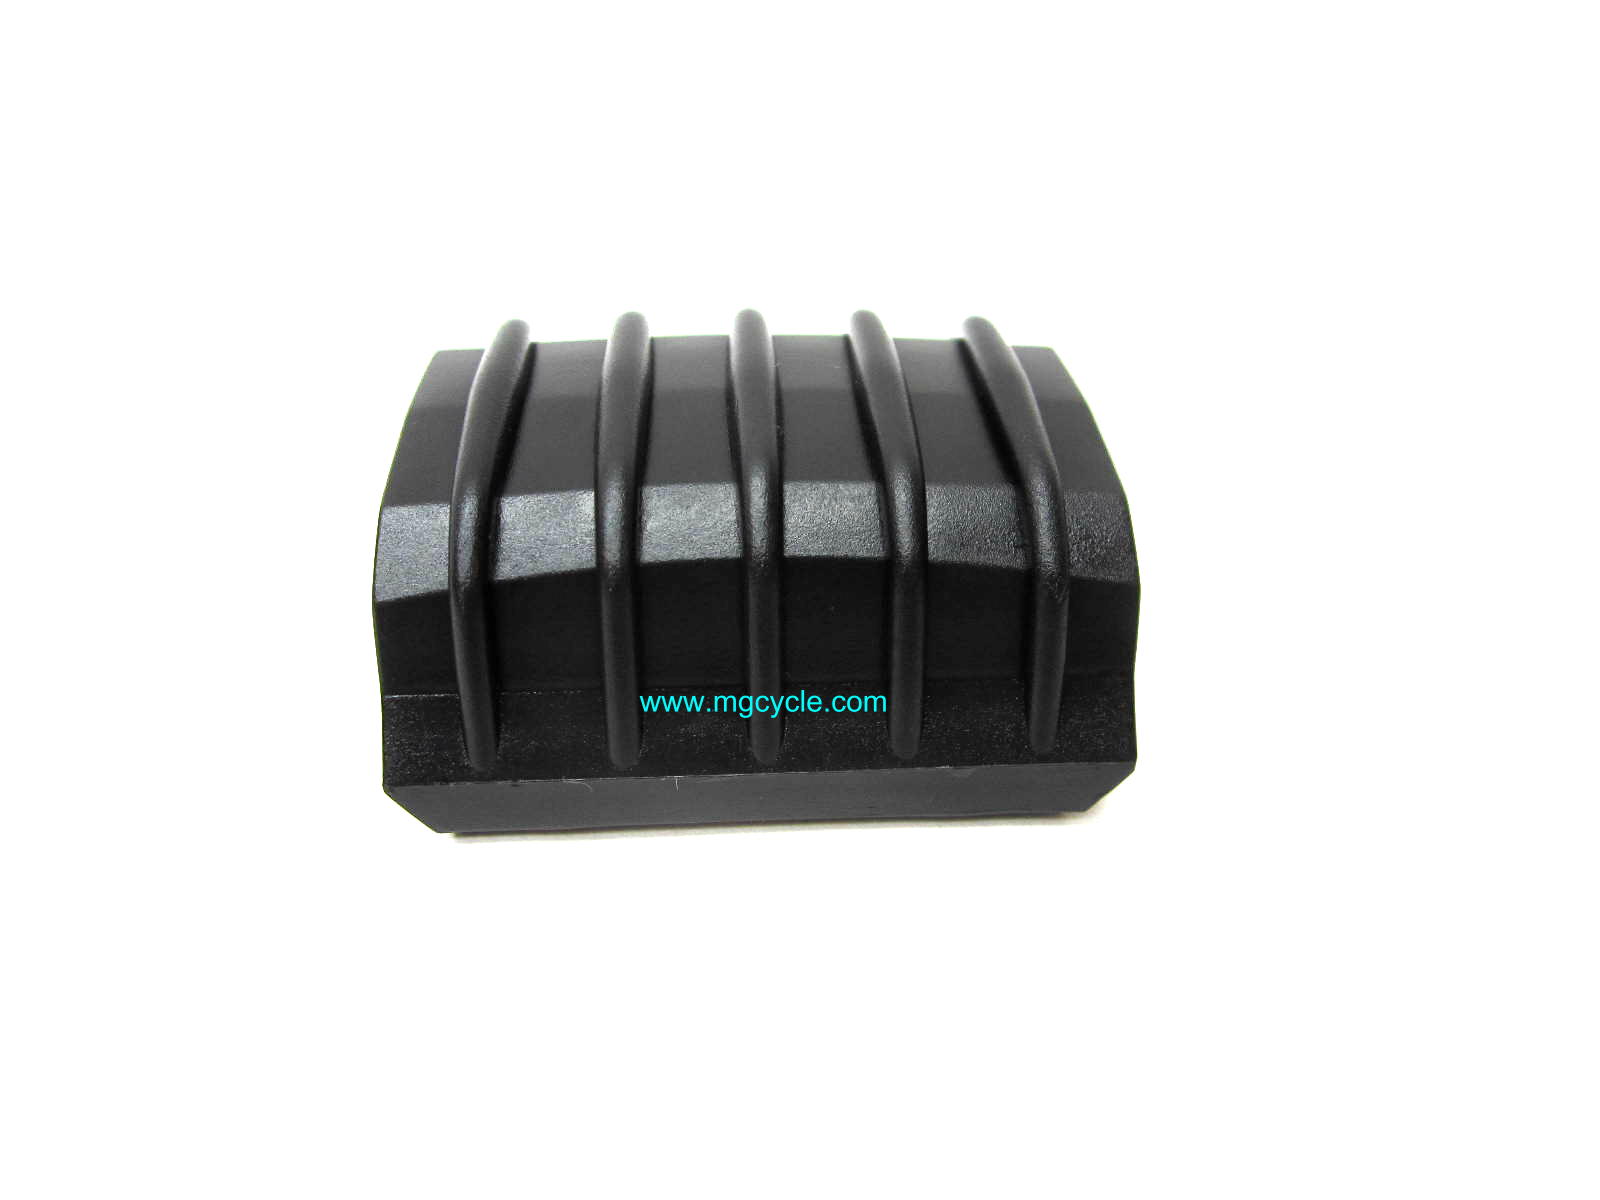 Brembo caliper cover for single nipple F08 calipers GU17654760